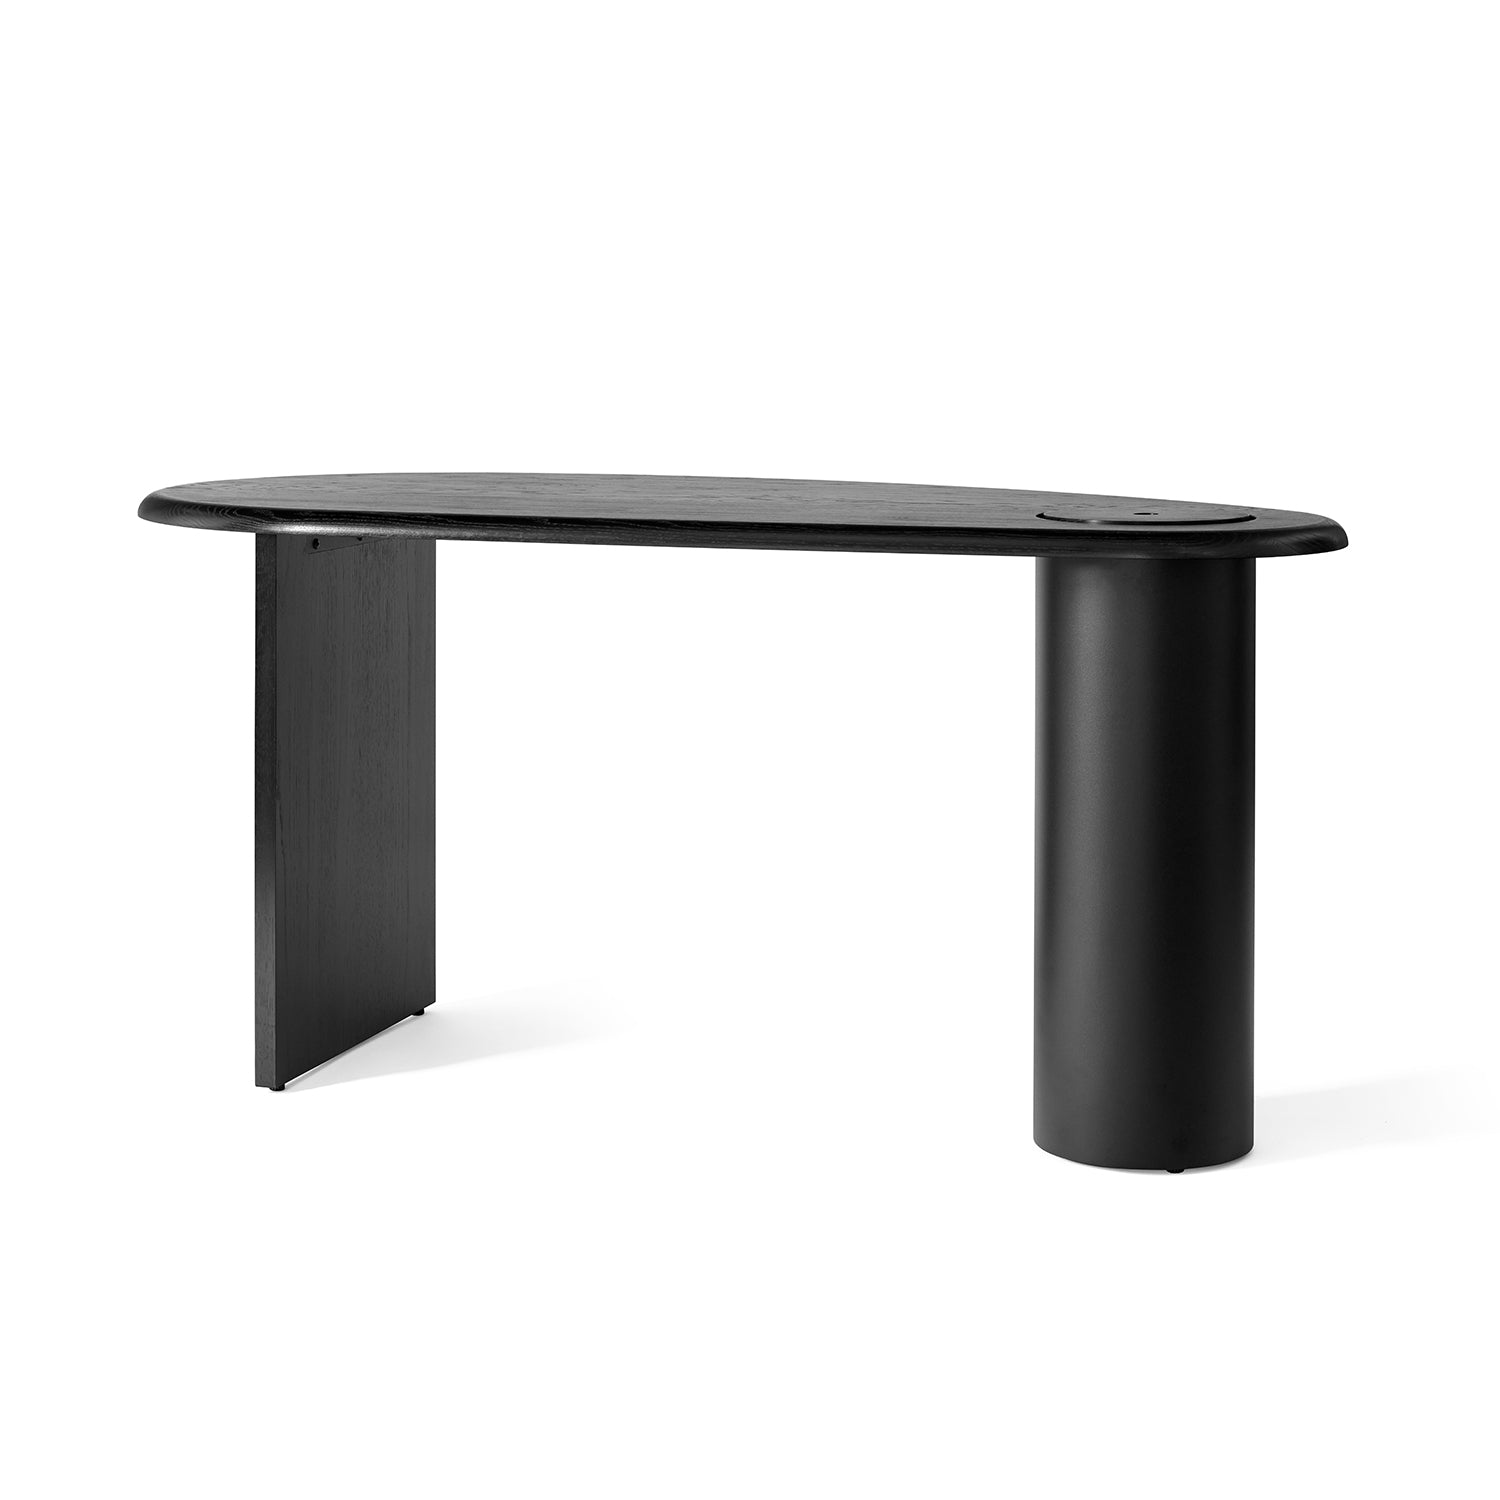 The Eclipse Desk - The Design Choice